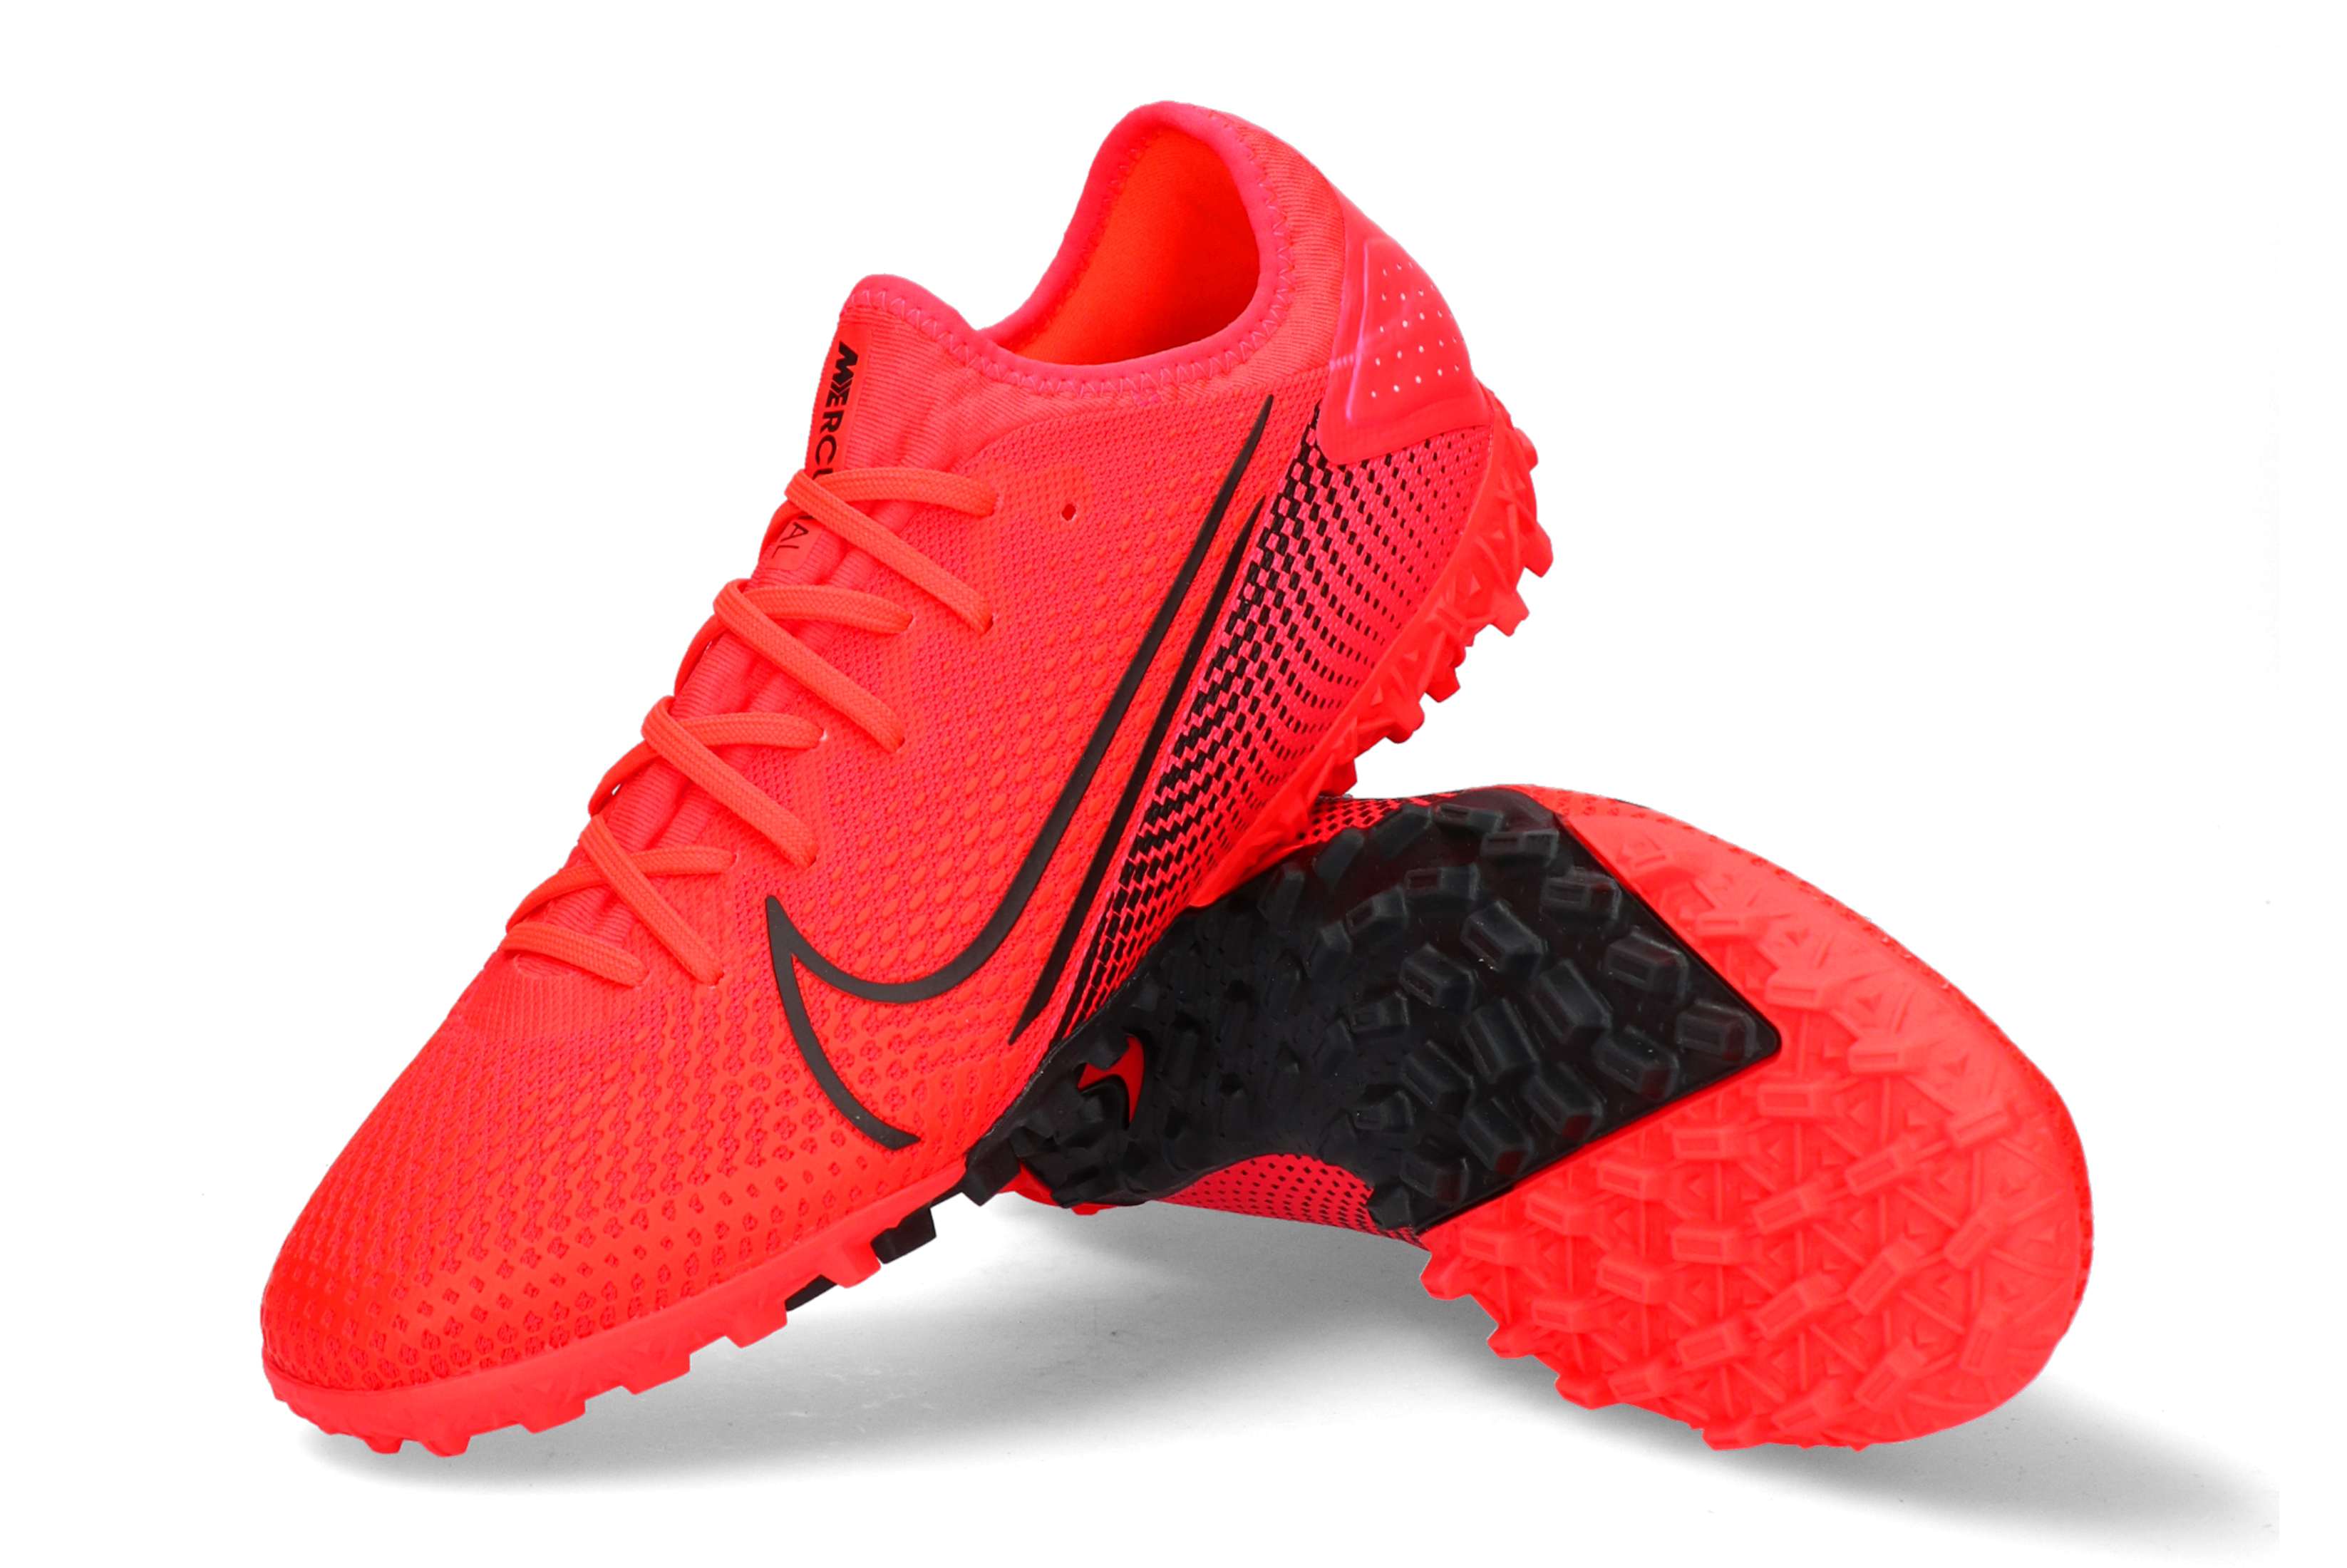 Nike Vapor 13 Pro TF | R-GOL.com - Football boots & equipment